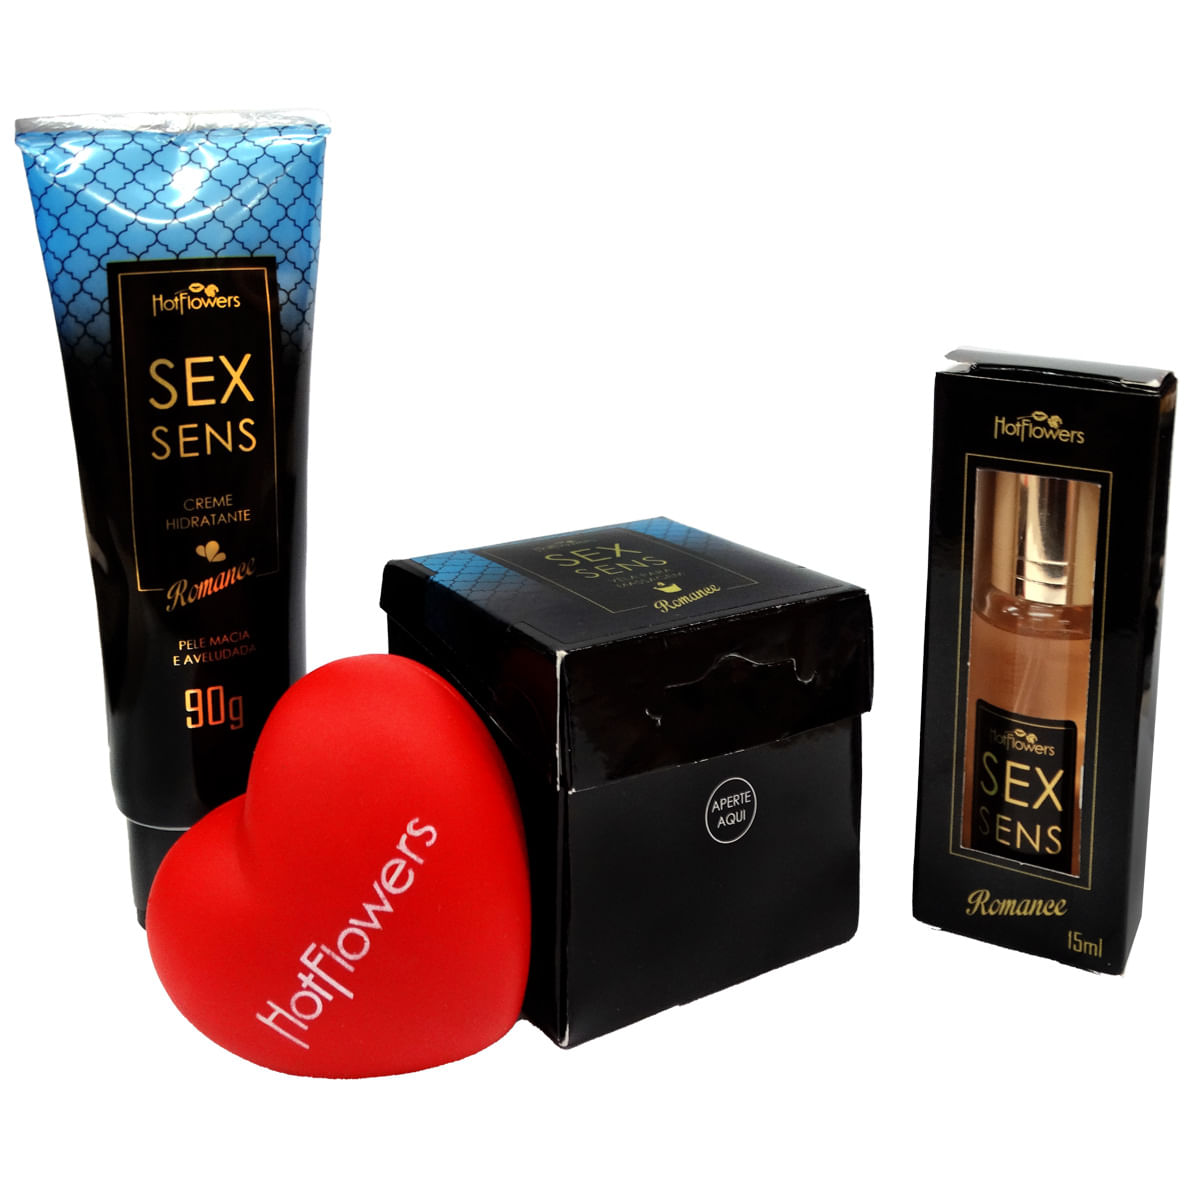 Kit Sex Sens Romance com Vela Creme Perfume e Coração Anti Stress Hot Flowers